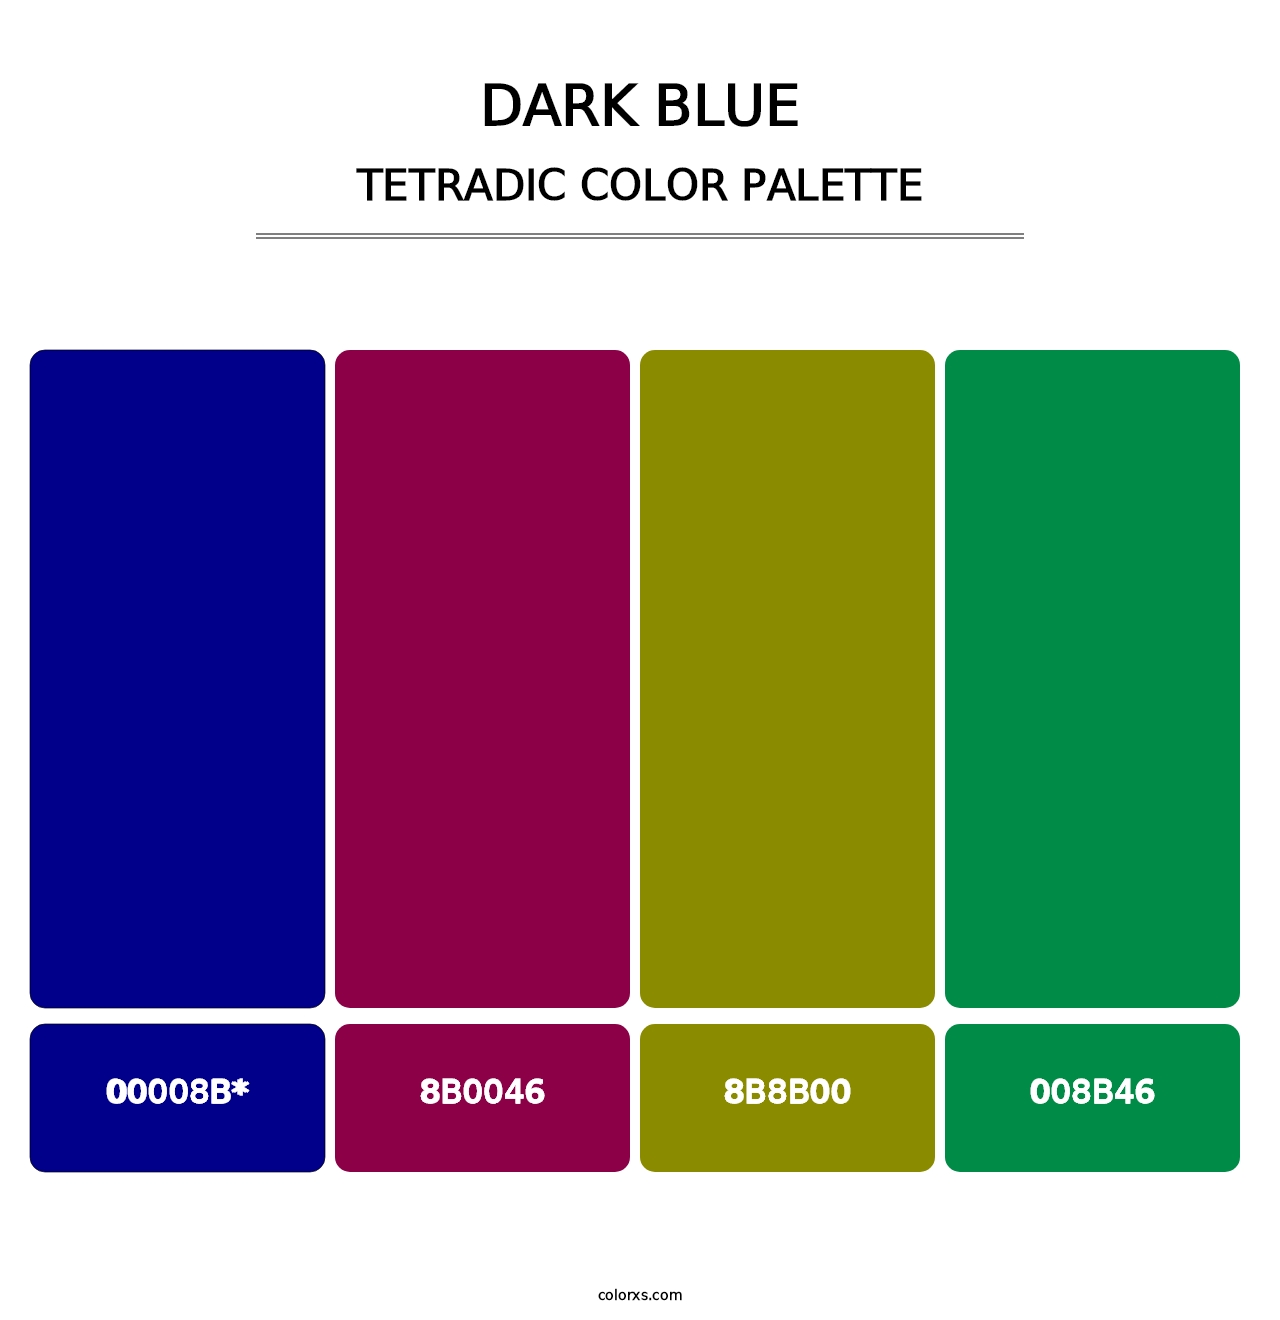 Dark Blue - Tetradic Color Palette